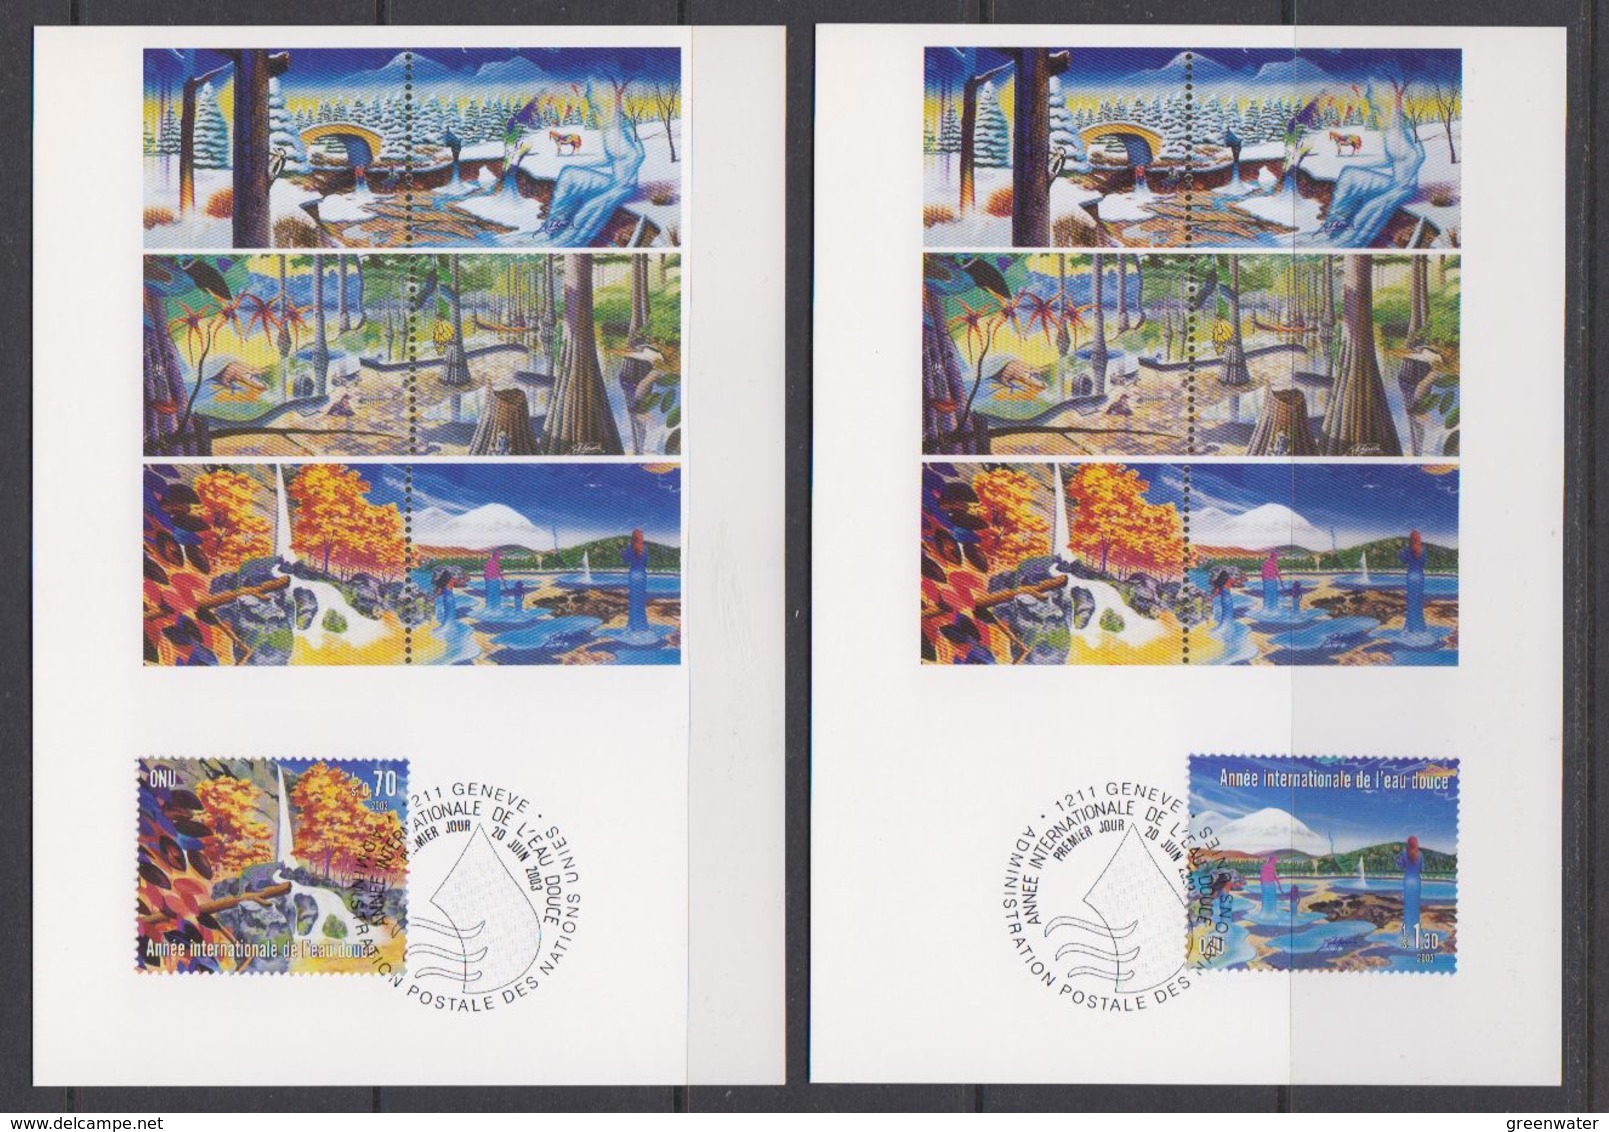 UNO Geneva 2003 Année Internationale De L'eau Douce 2v 2 Maxicards (40129) - Maximumkaarten